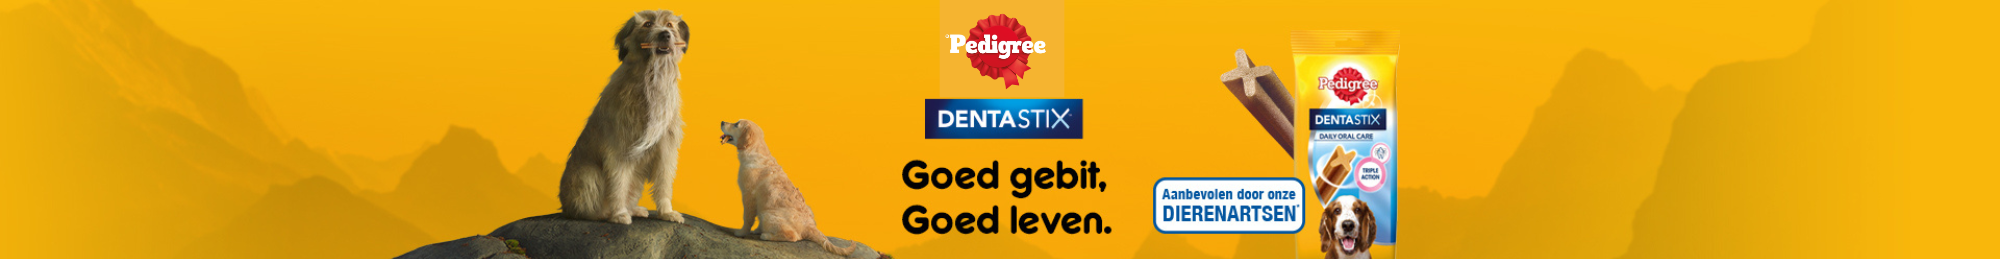 Pedigree dentastix